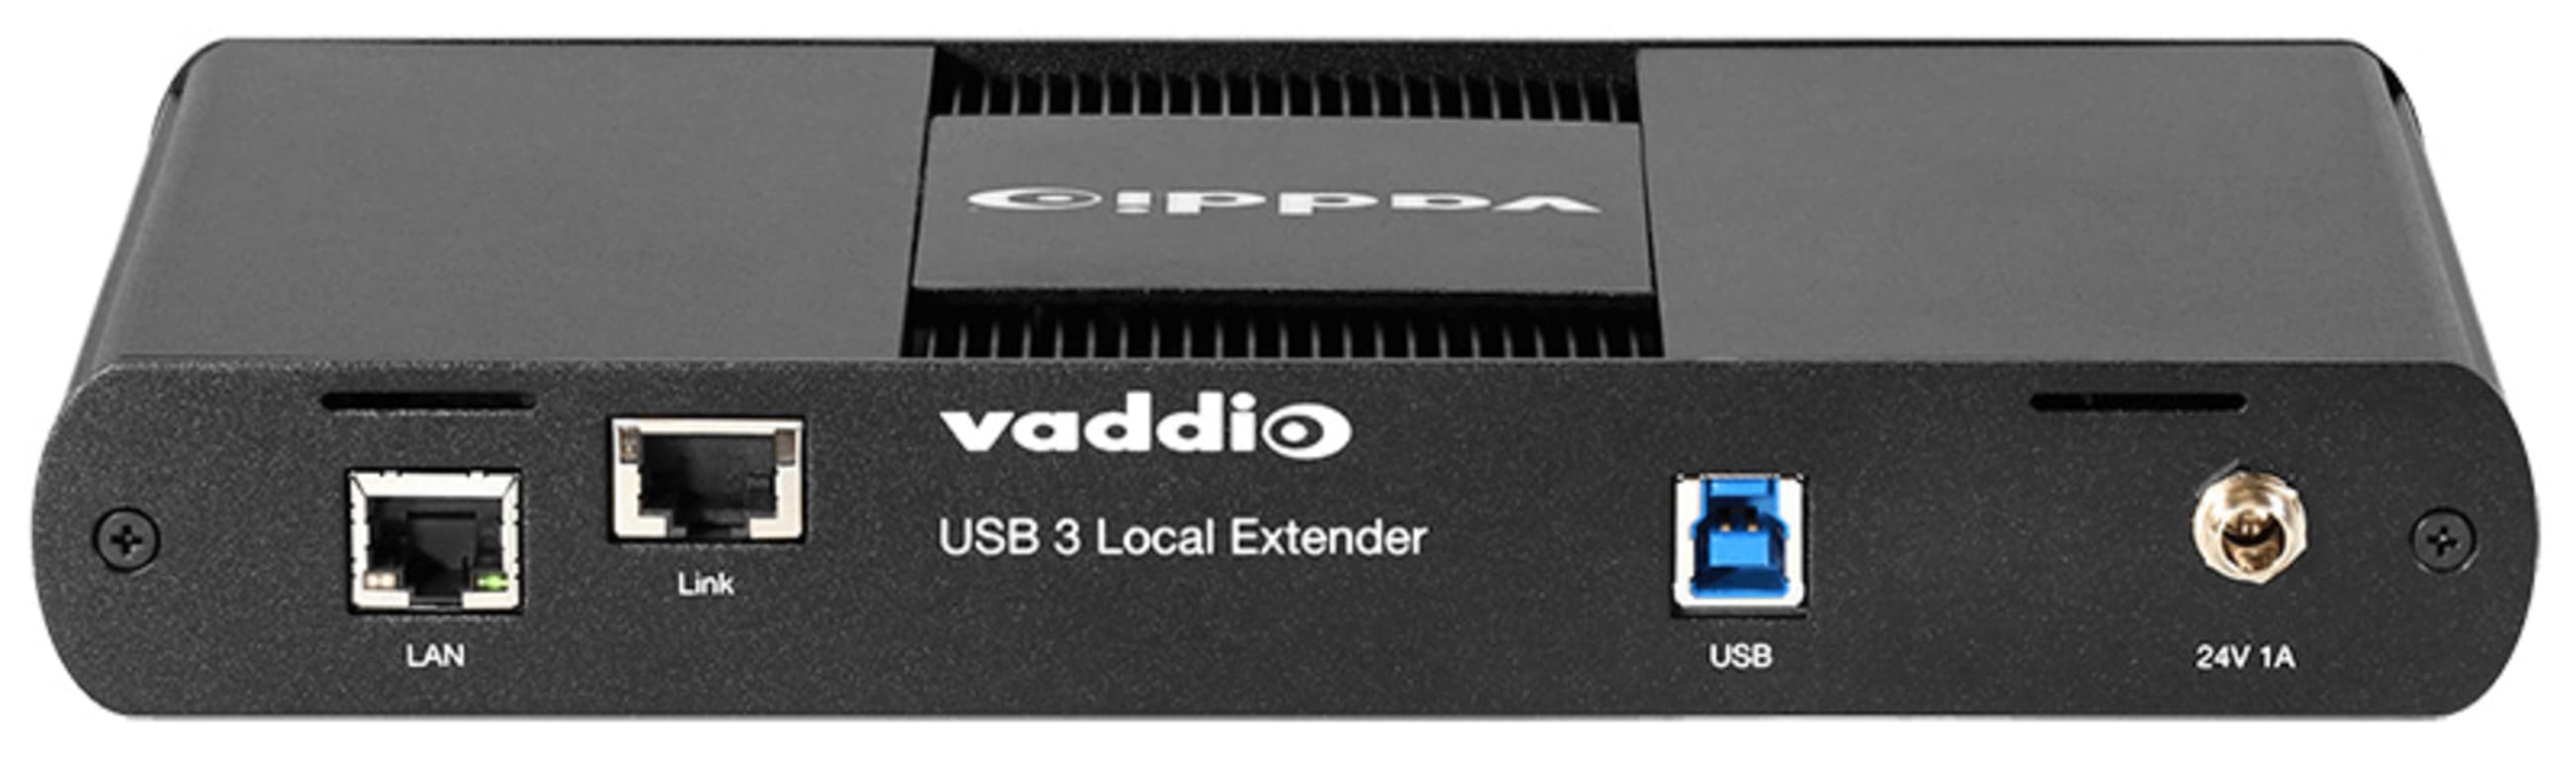 Vaddio USB 3 Extenders 999-1005-032 B&H Photo Video